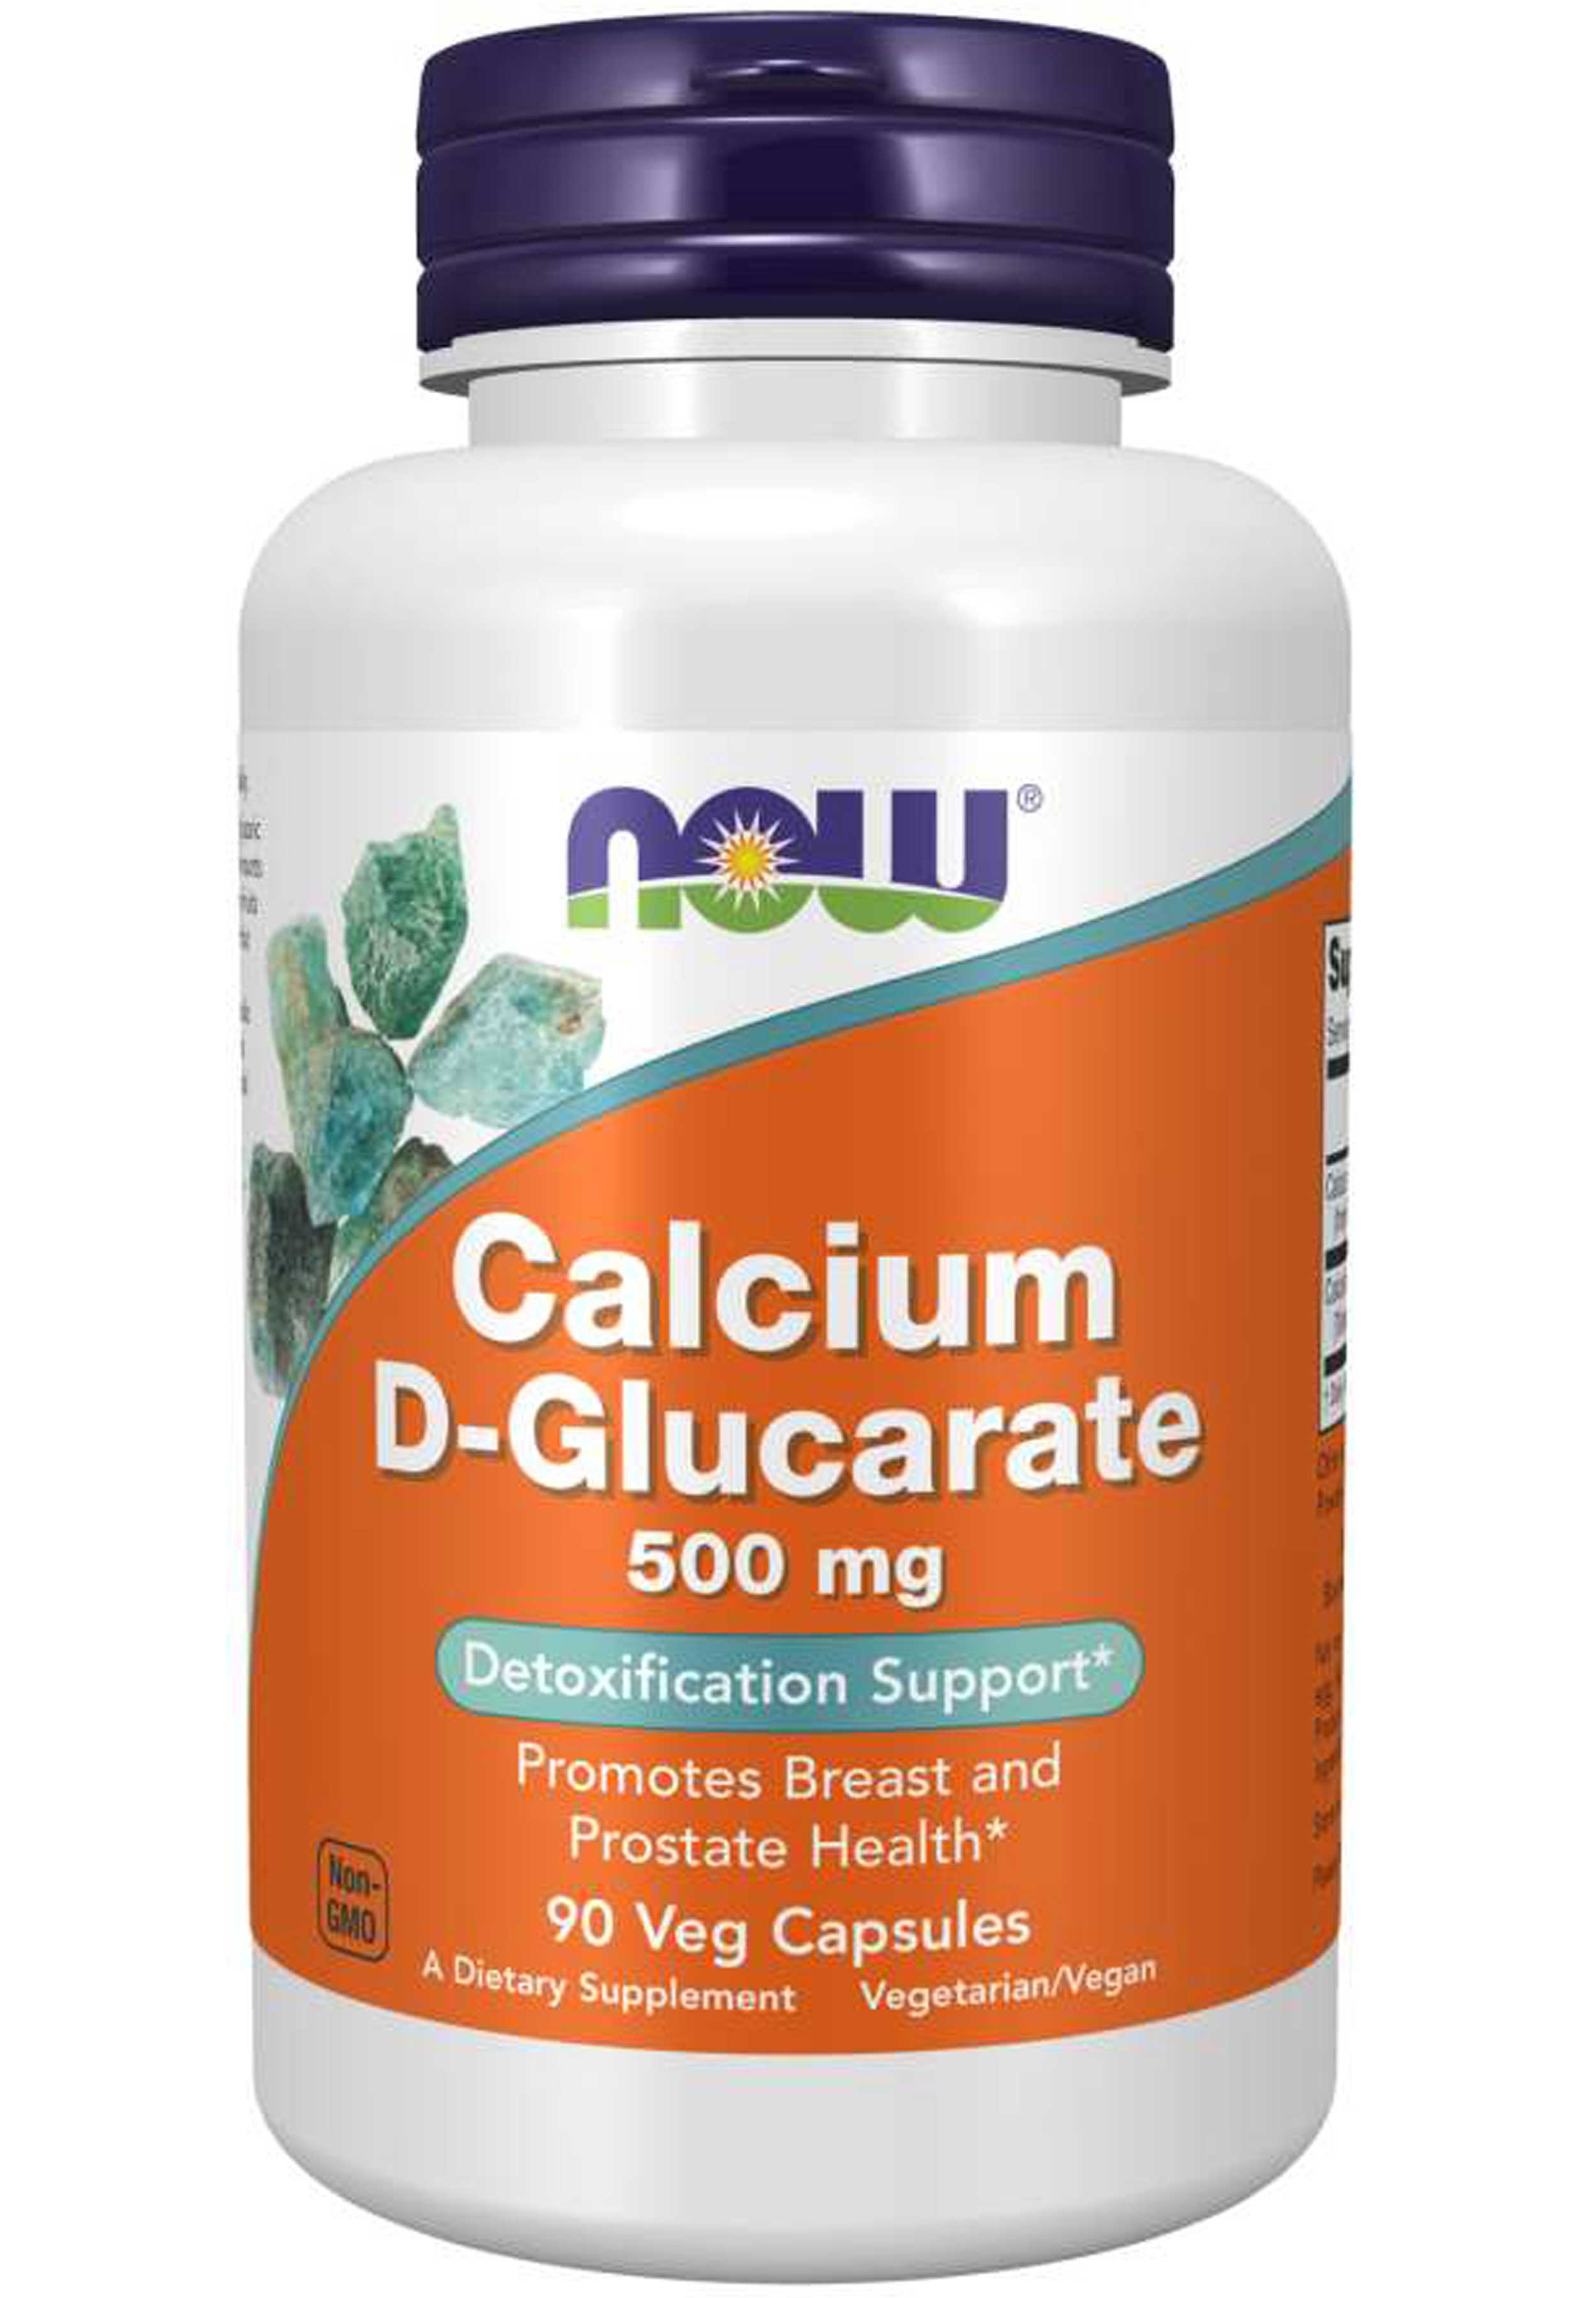 NOW Calcium D-Glucarate 500 mg